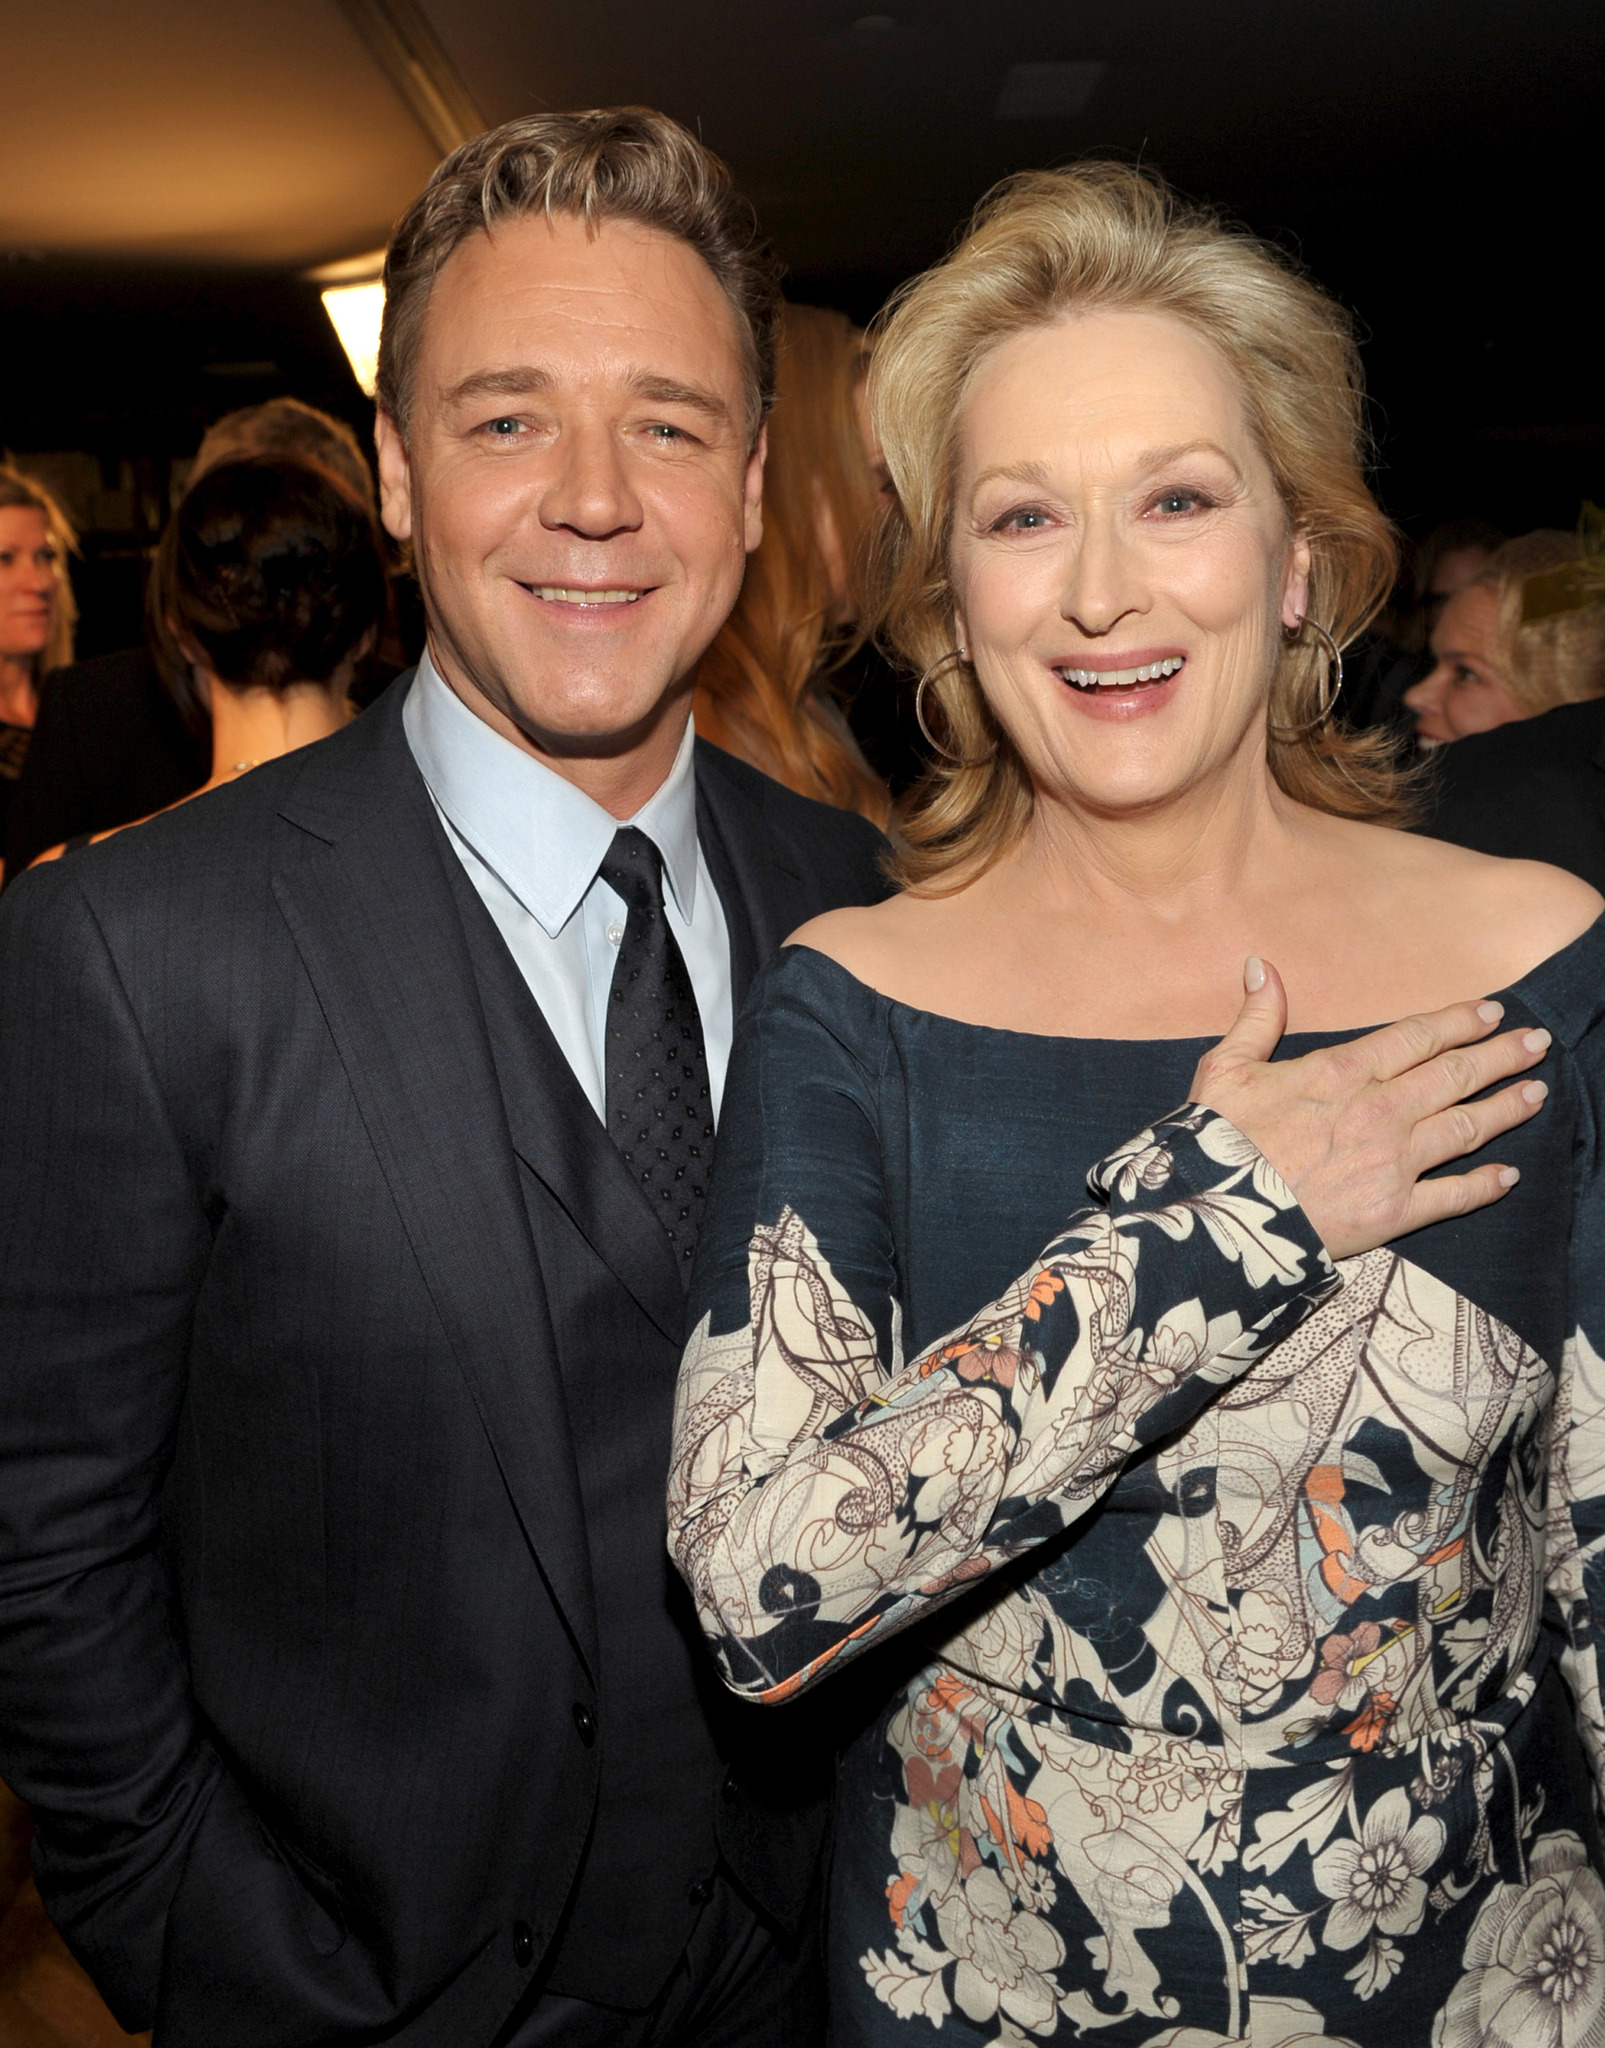 Russell Crowe and Meryl Streep